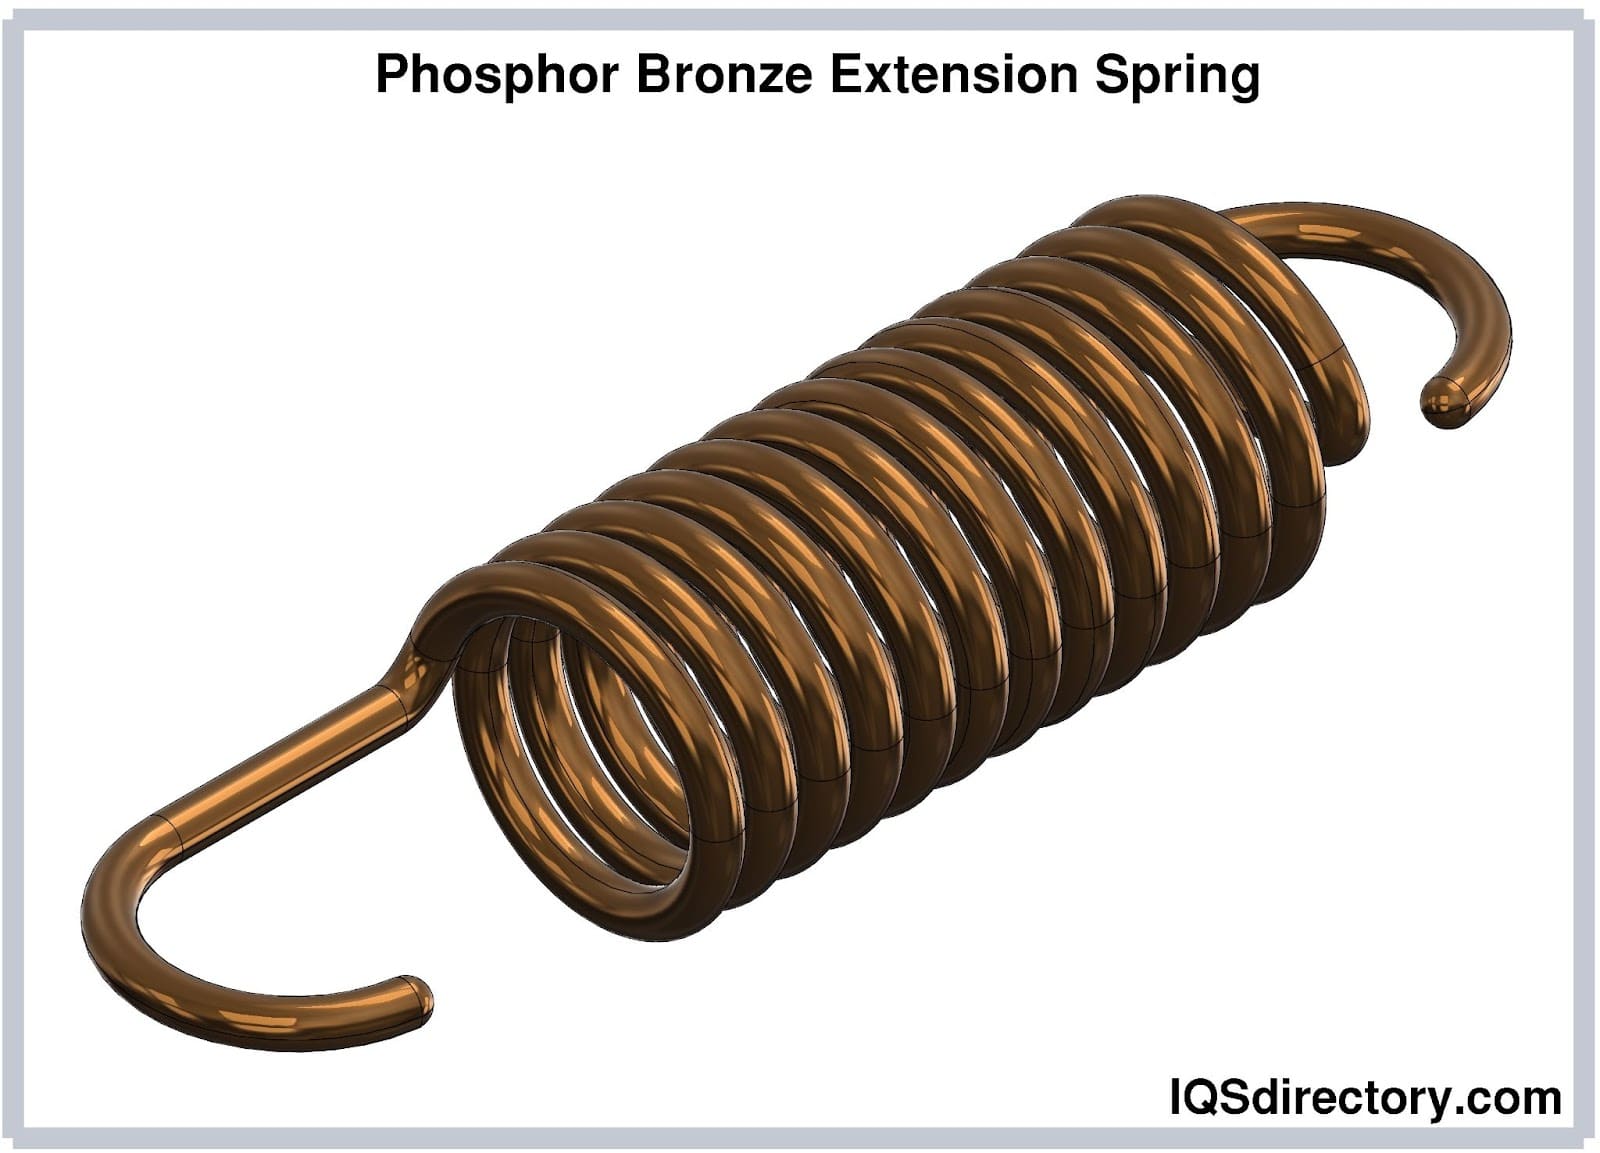 Phosphor Bronze Extension Spring